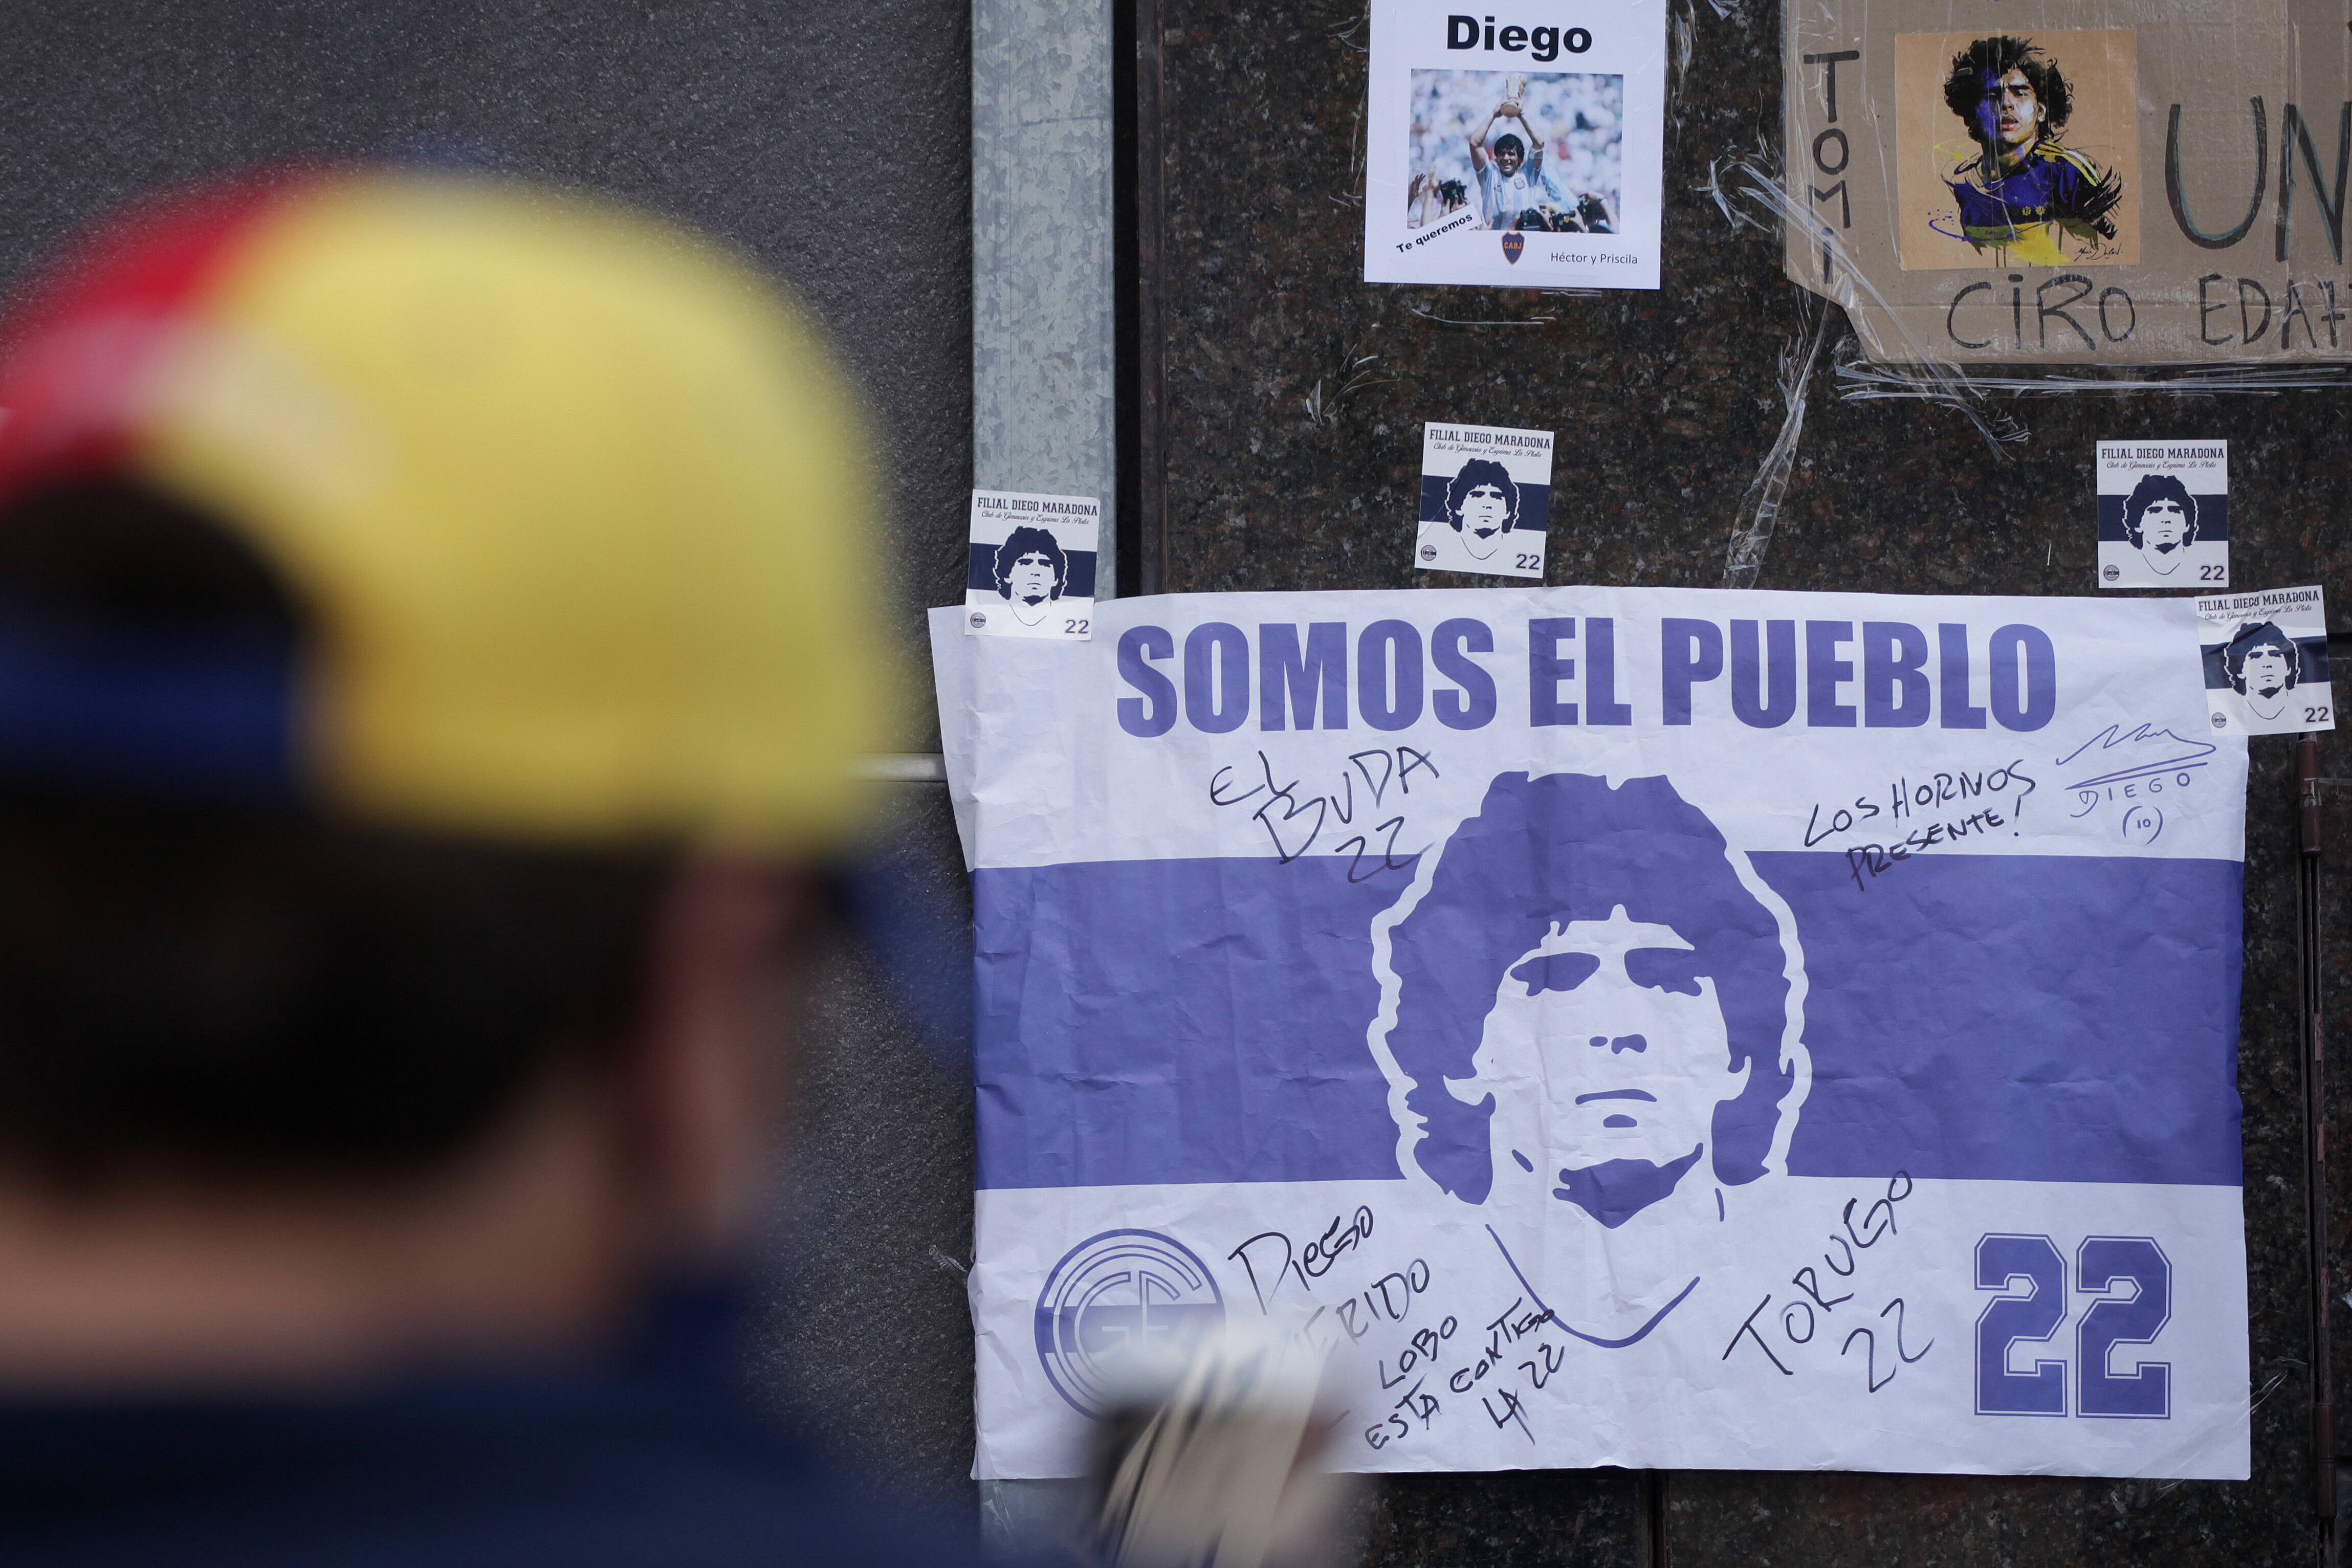 November 4, 2020, Buenos Aires, Buenos Aires, Argentina: Diego Armando Maradona Remains Hospitalized At The Olivos Clini